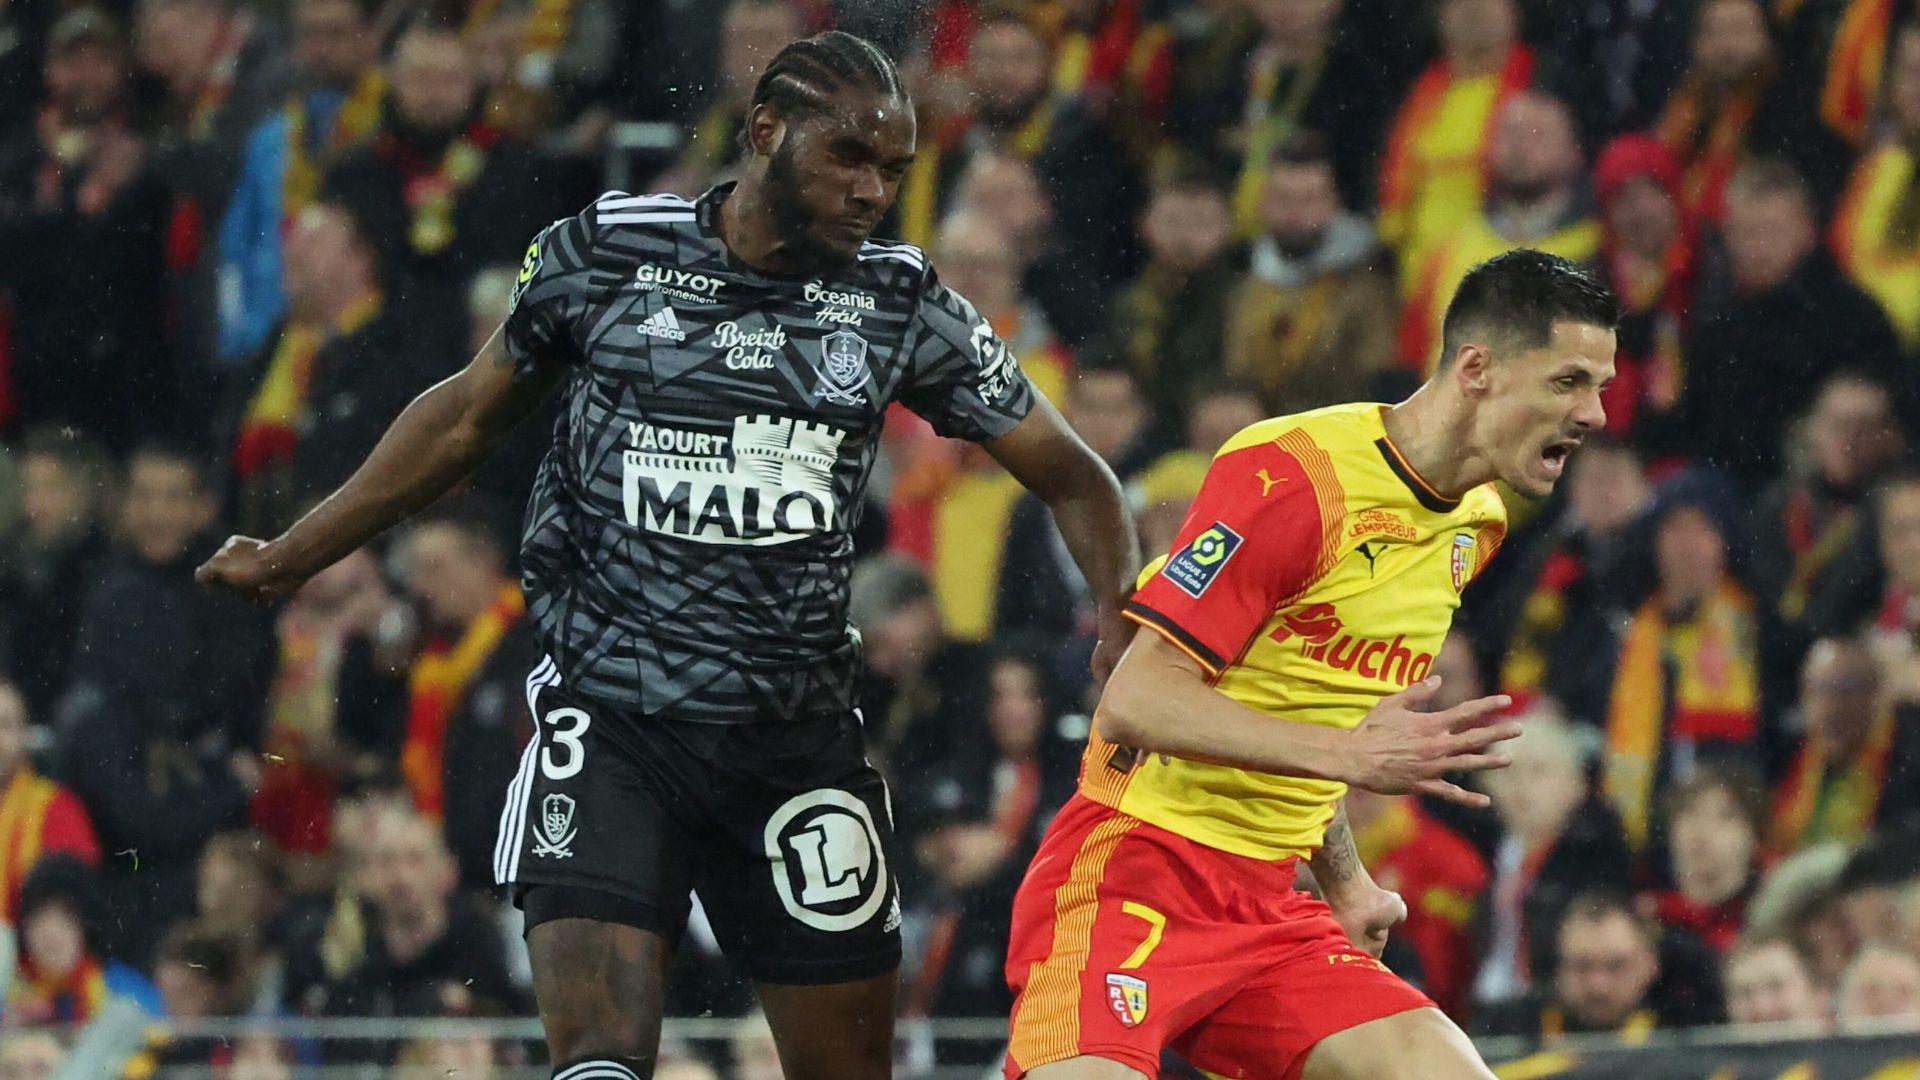 VIDEO | Ligue 1 Highlights: Lens vs Brest